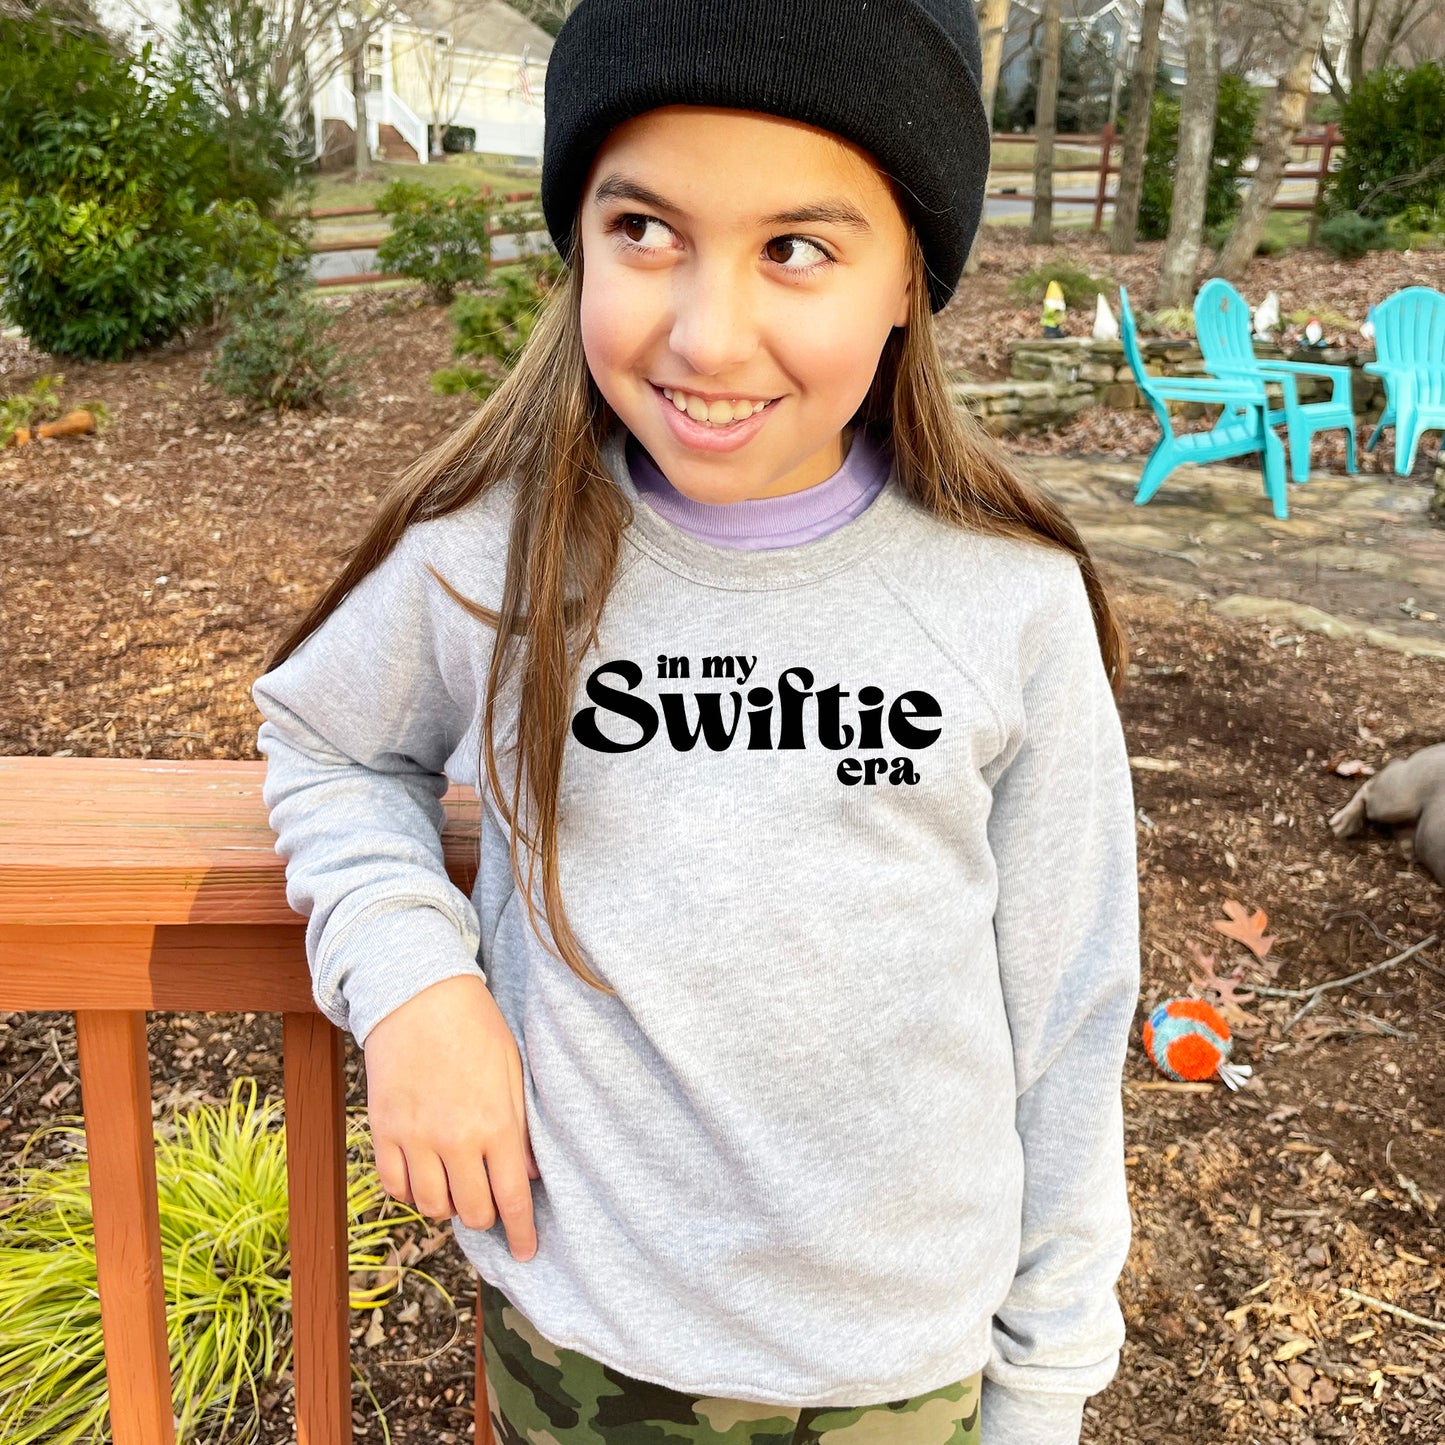 In My Swiftie Era - Kid's Sweatshirt - Heather Gray or Mauve